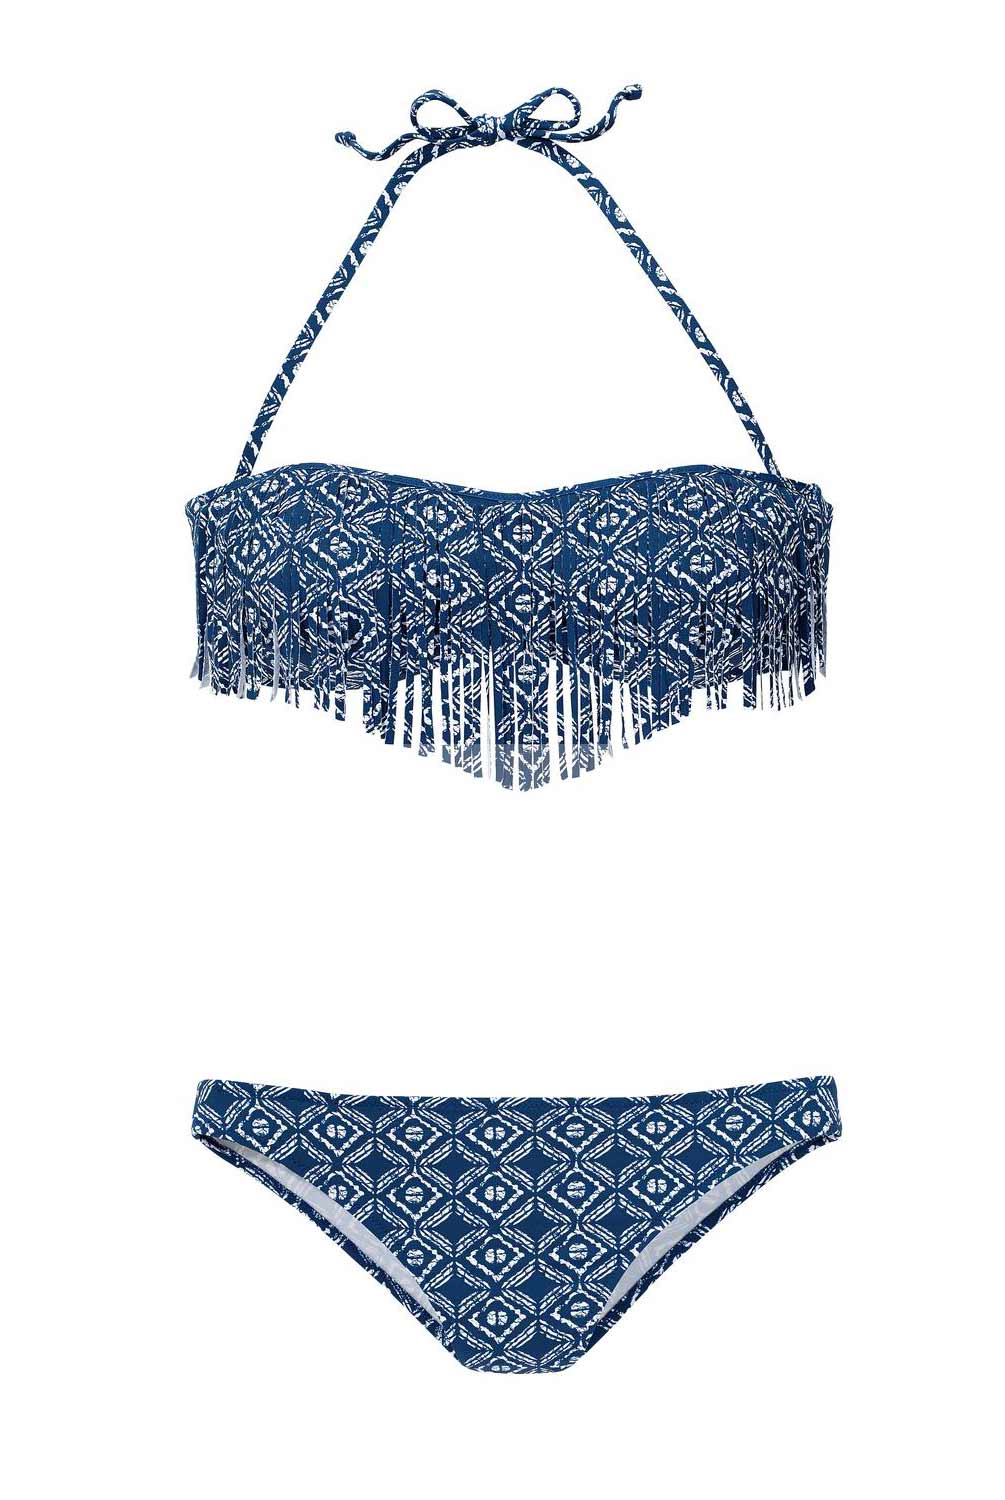 Venice Beach Damen Marken-Bandeau-Bikini, blau-weiß